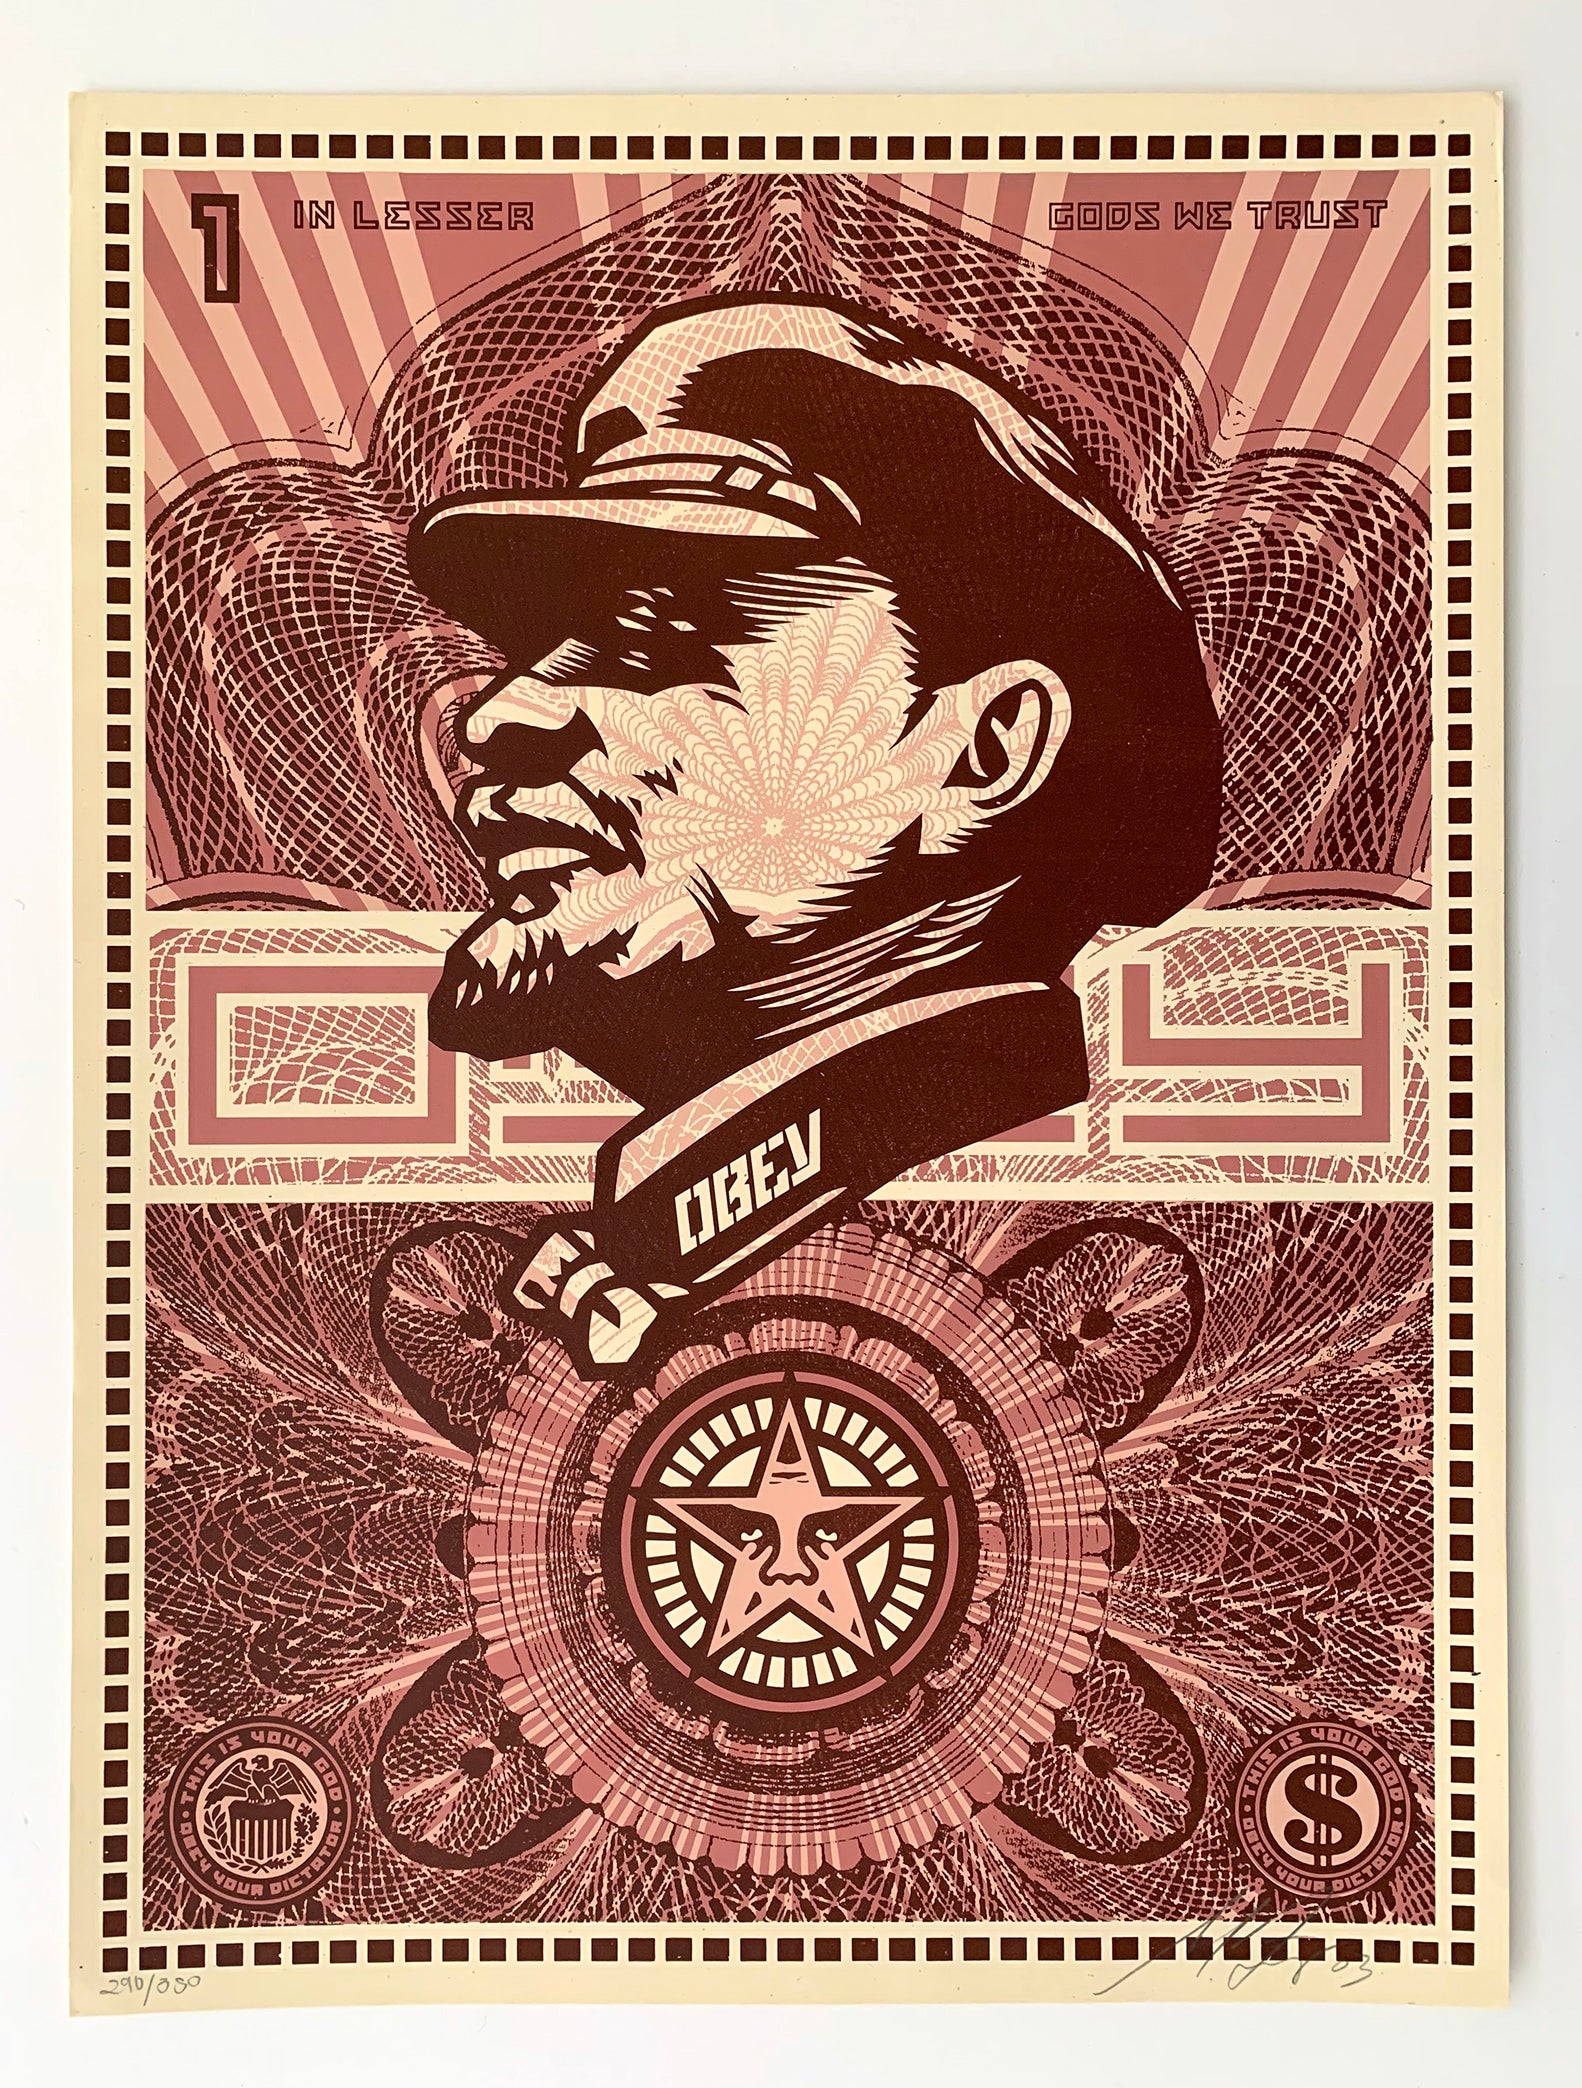 SHEPARD FAIREY - "Lenin Money" Print